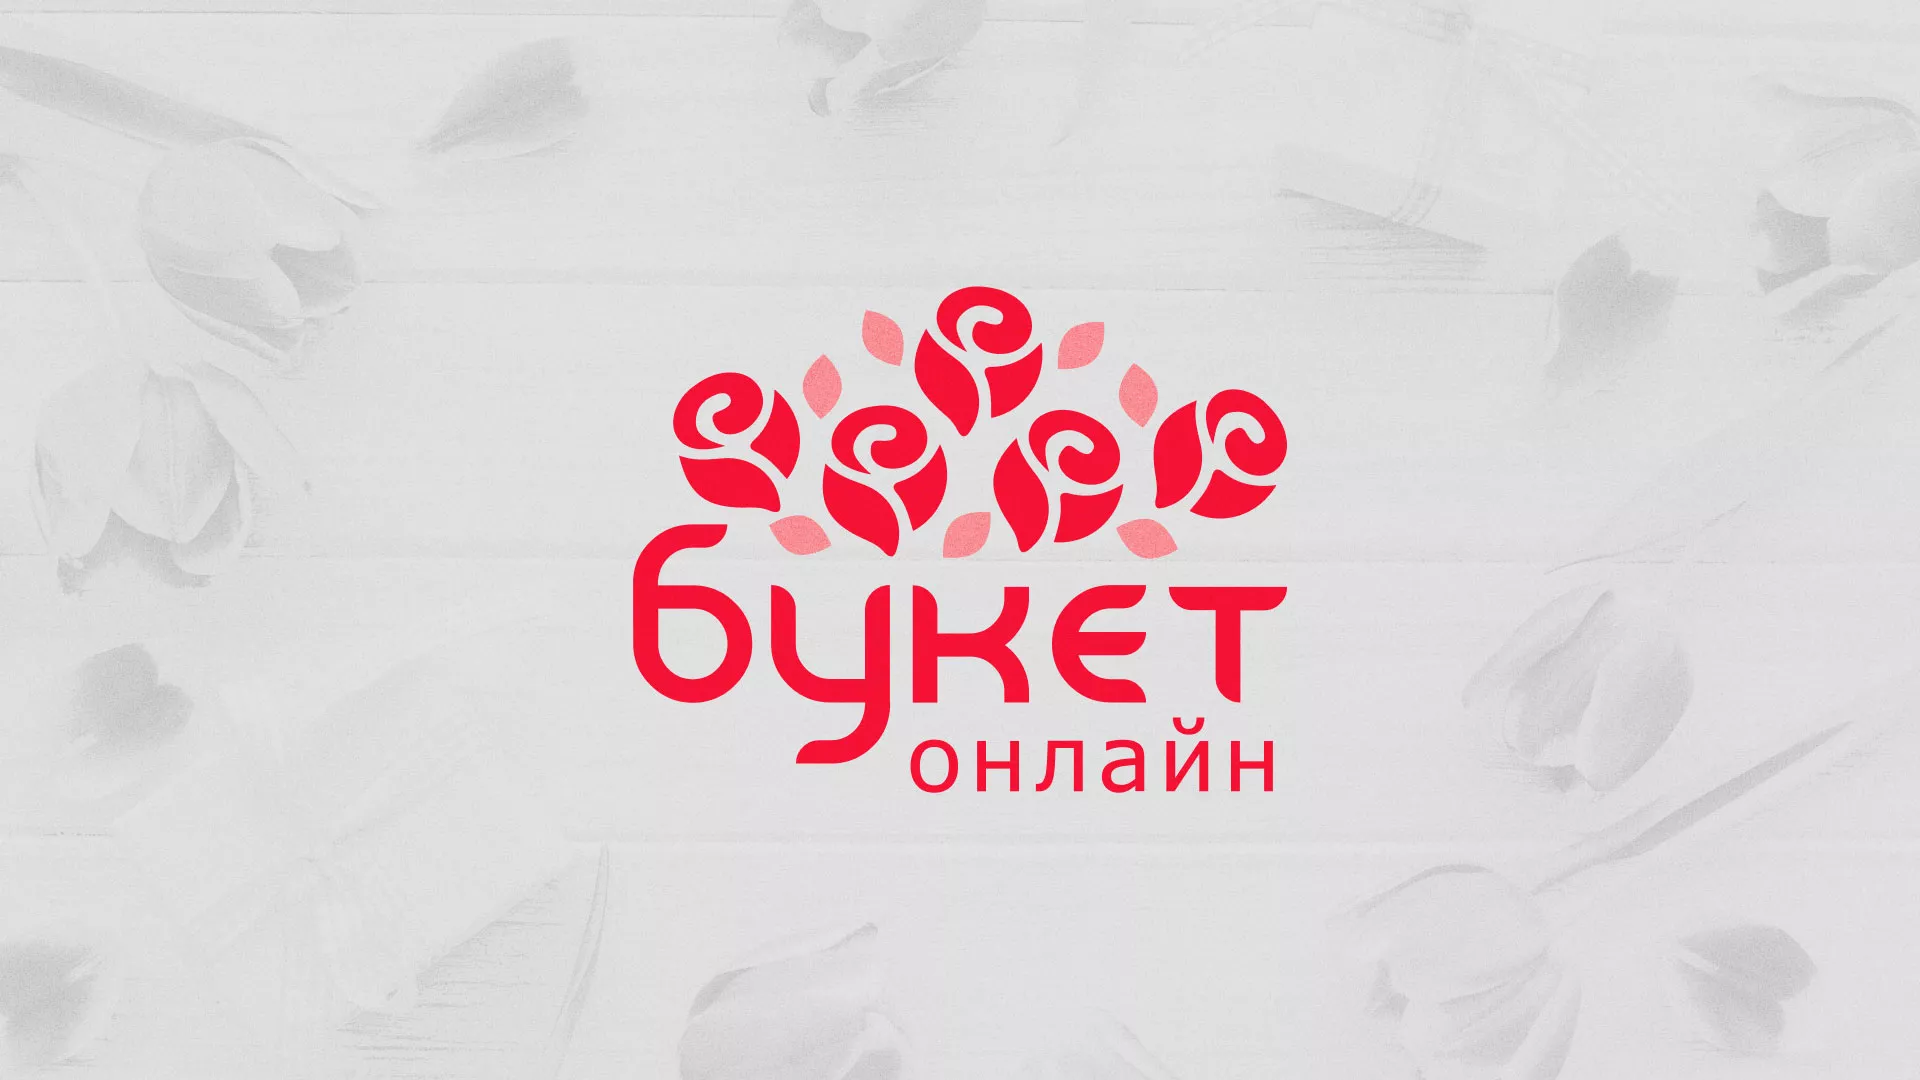 Создание интернет-магазина «Букет-онлайн» по цветам в Бирюче